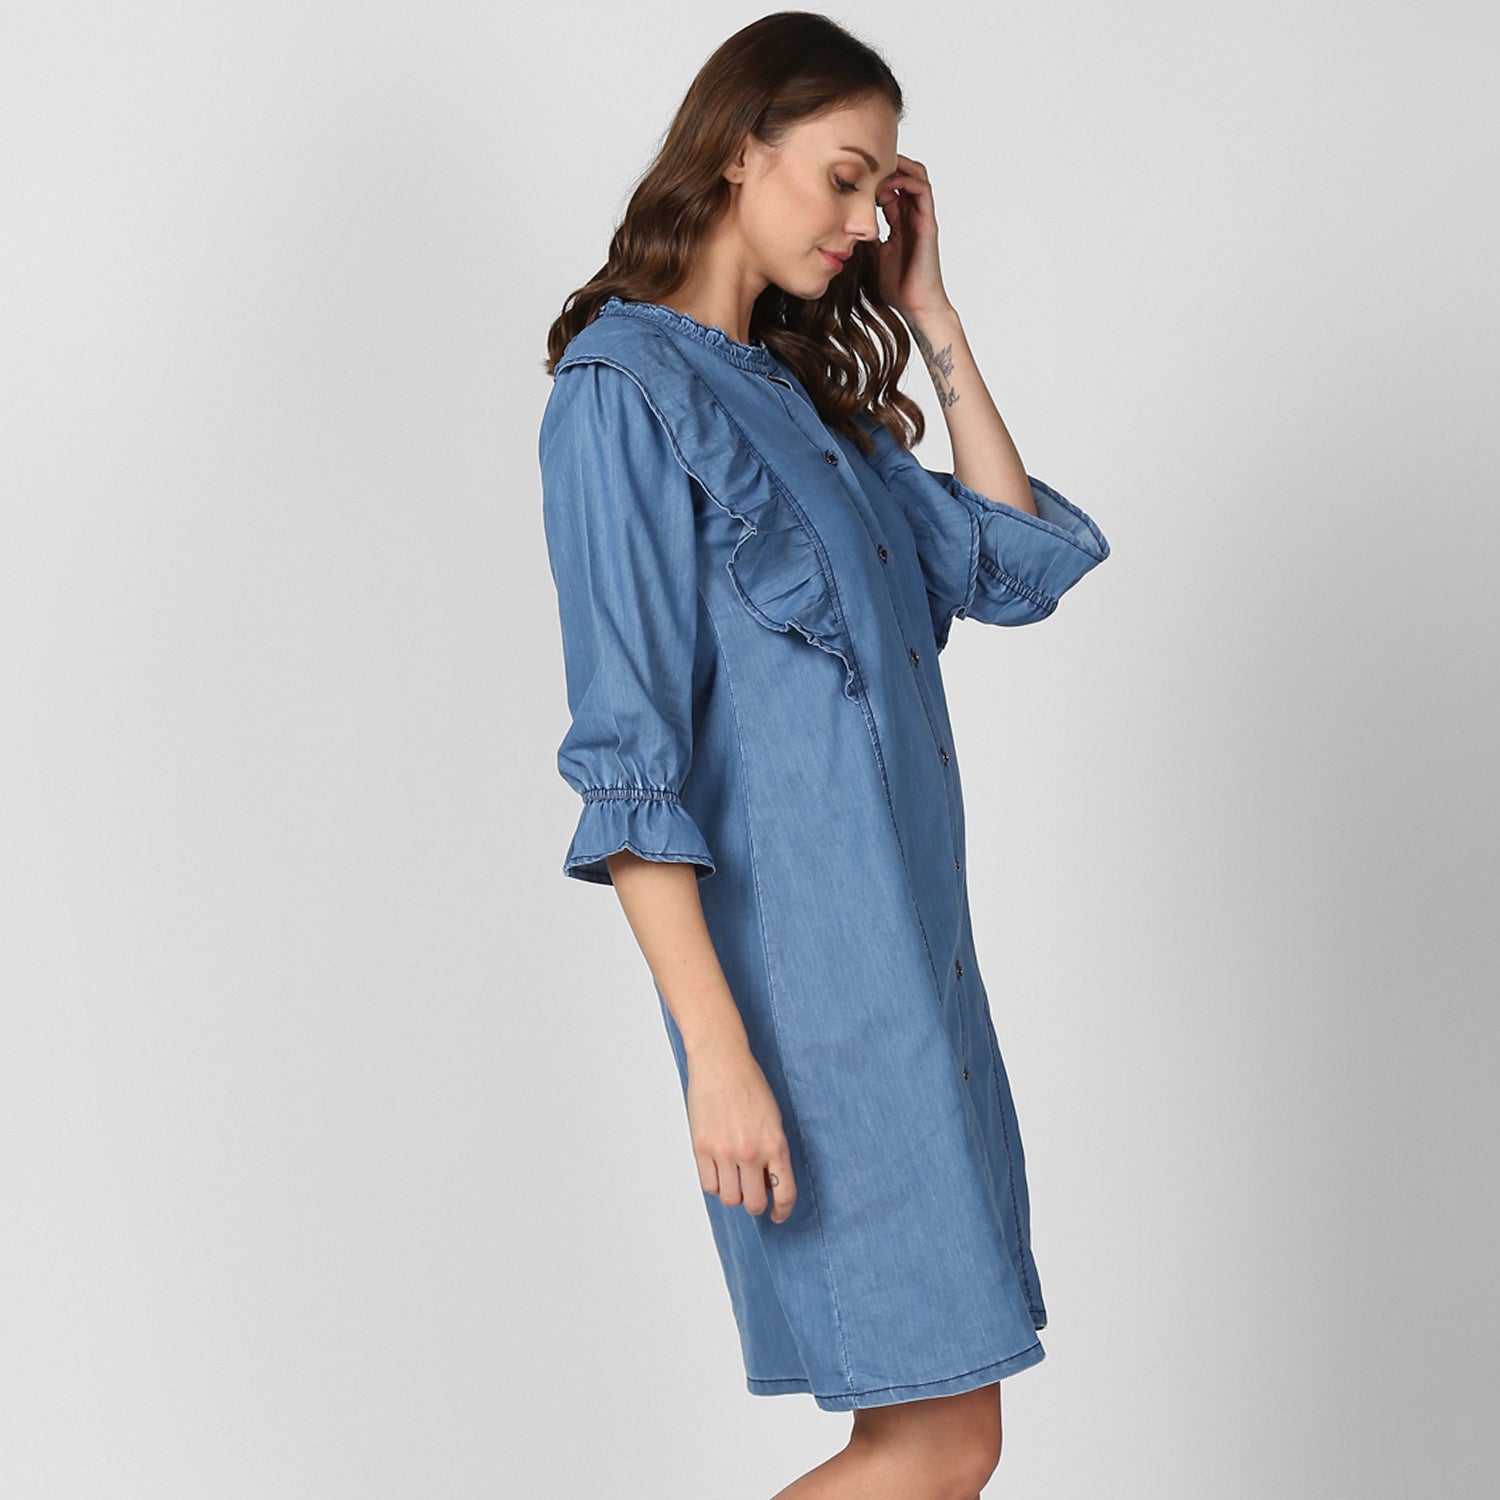 Women's Blue Denim Shirt Dress with Side Ruffle Detail - StyleStone